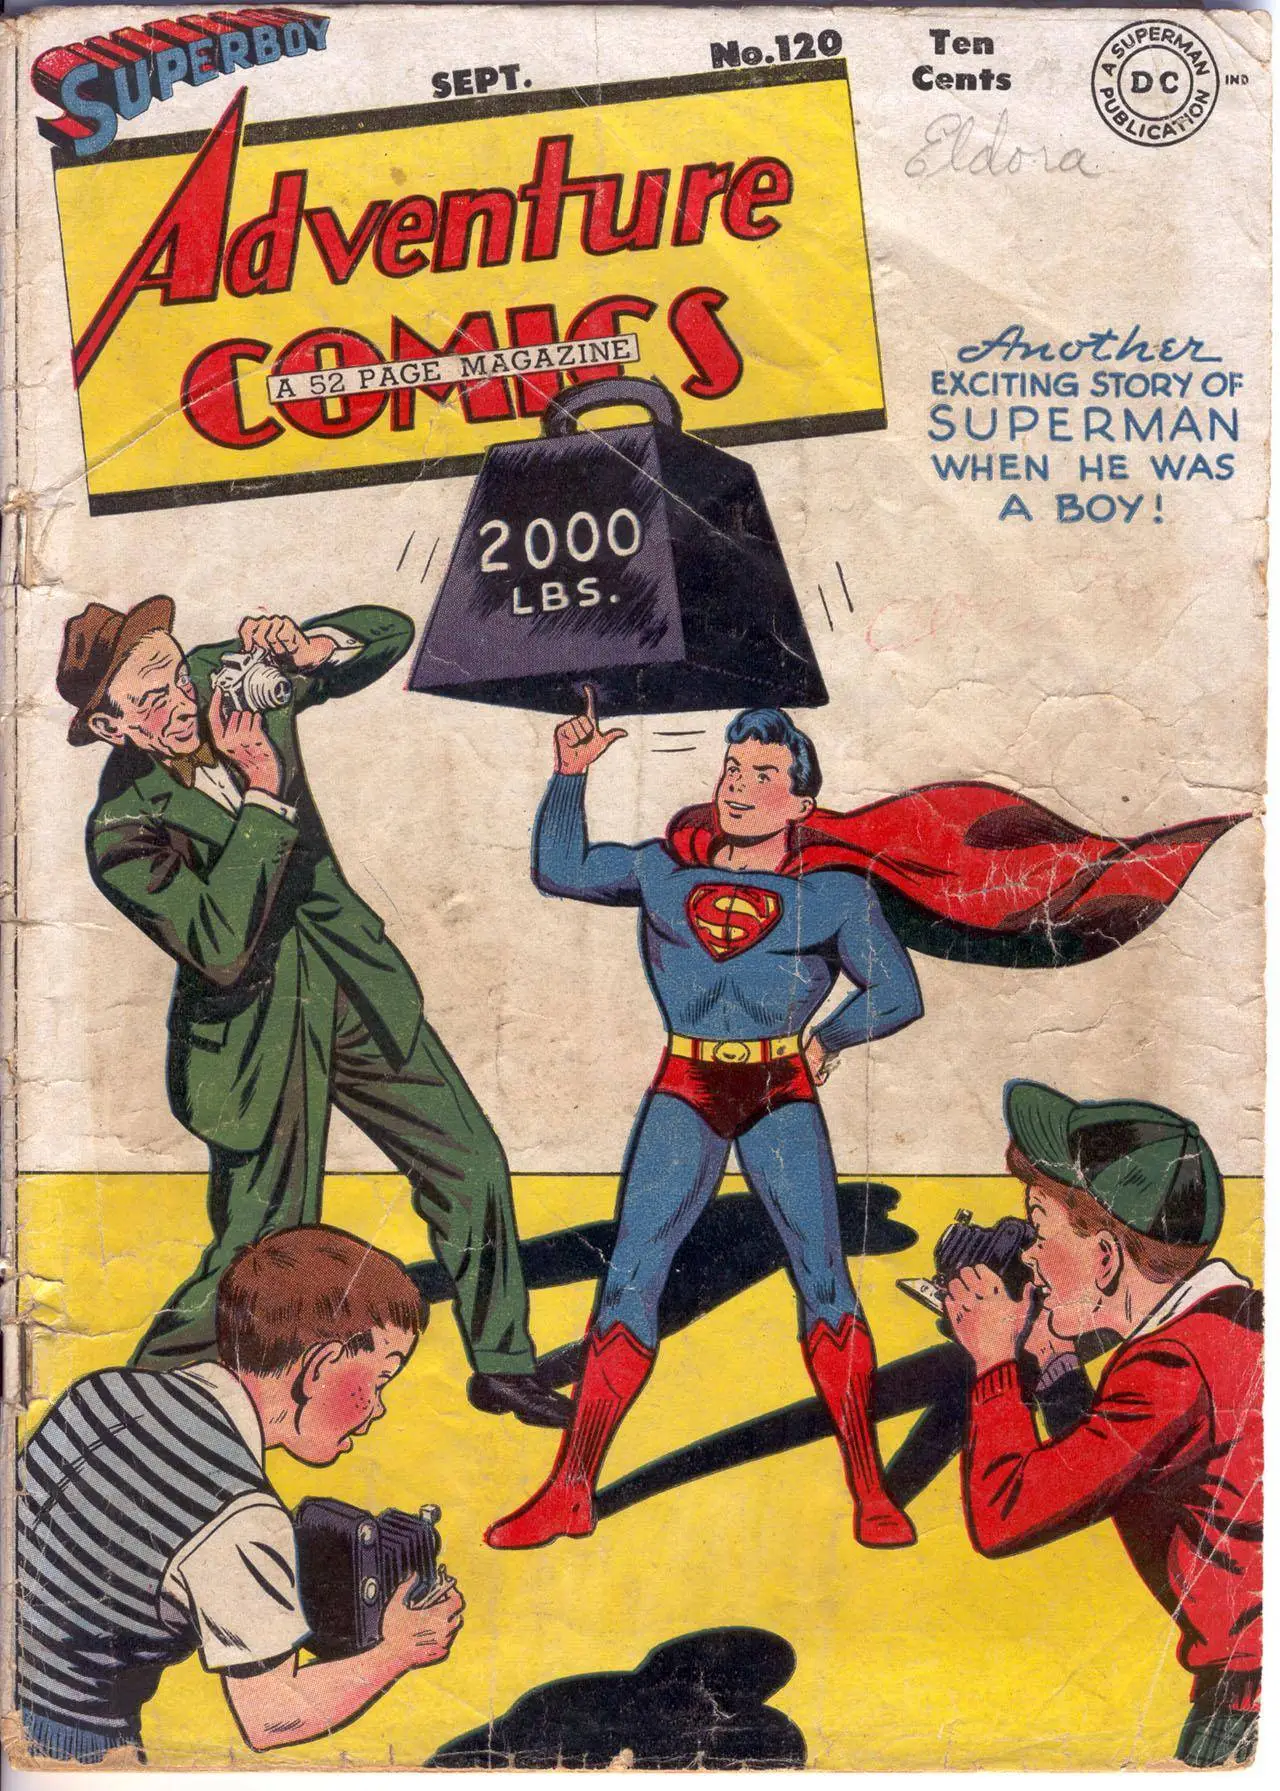 Adventure Comics 1947-09 120